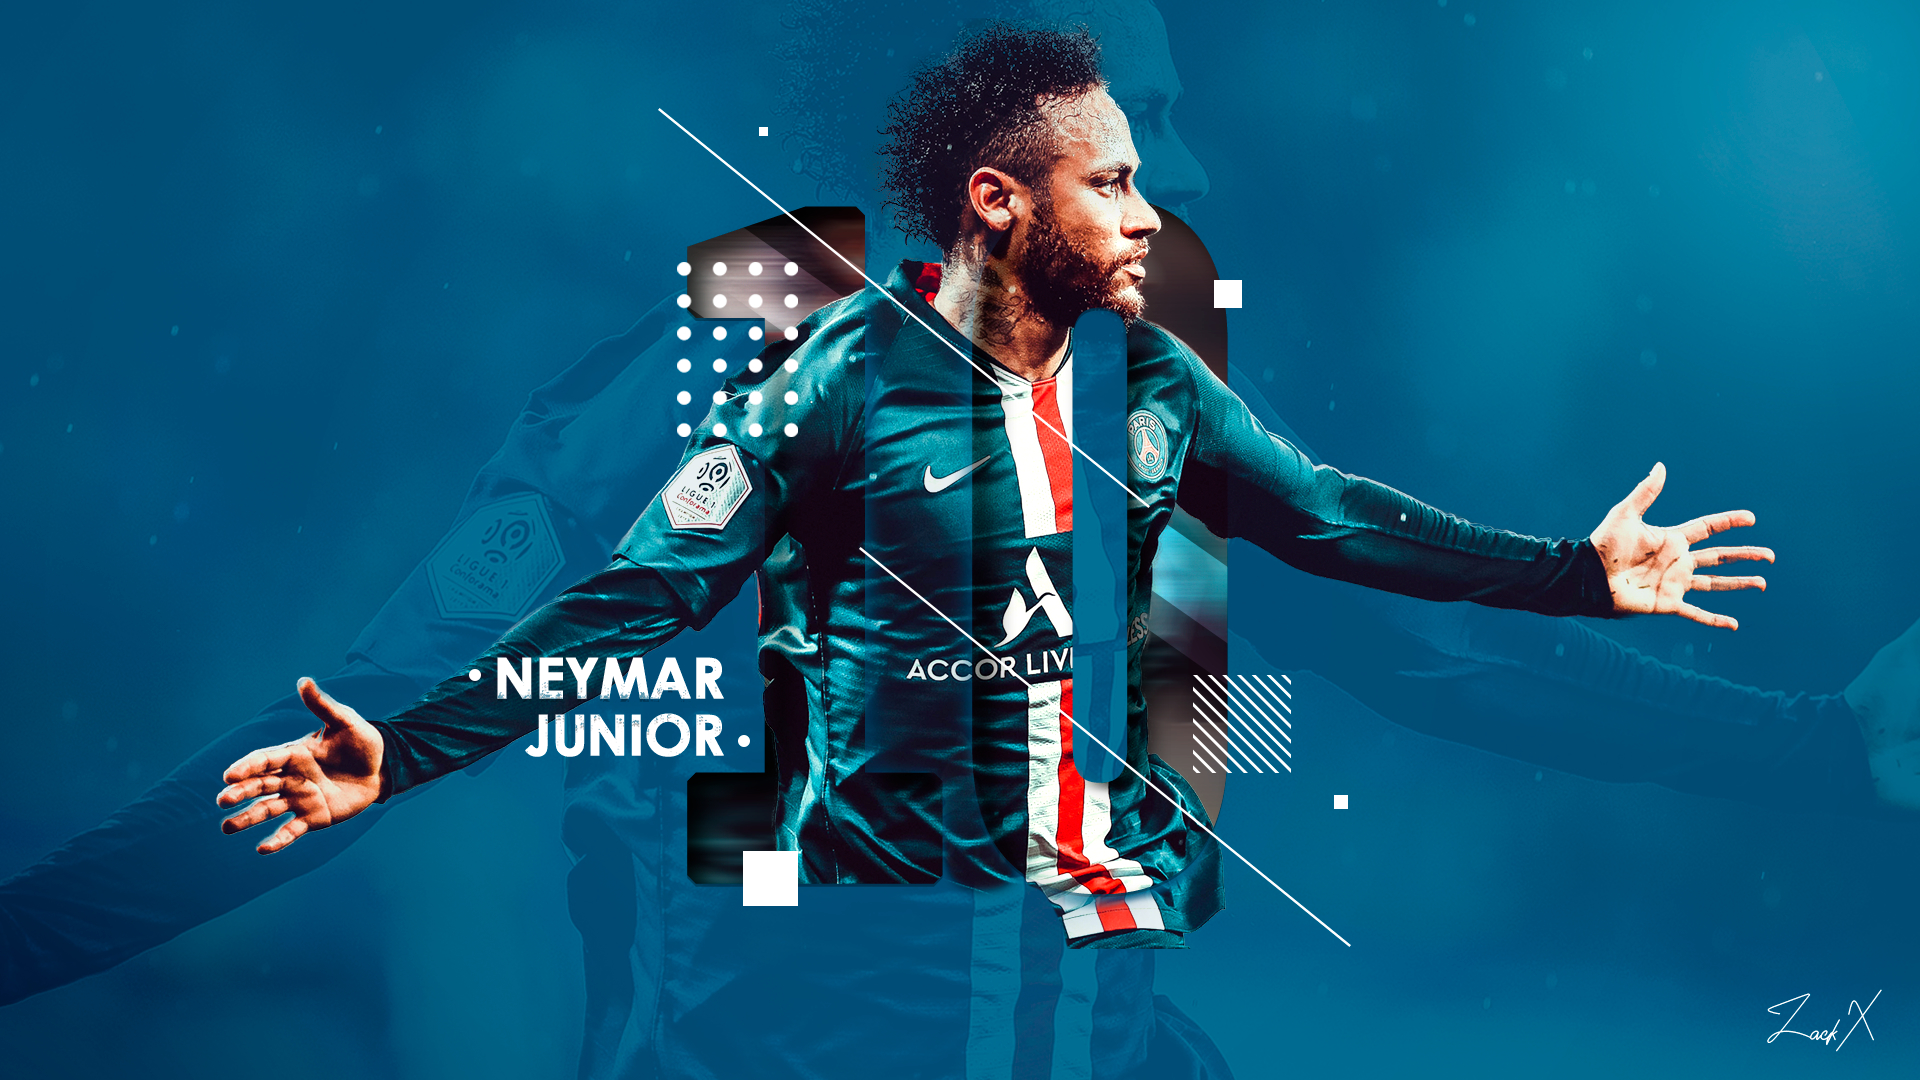 Muro D'Arte Cool Neymar Wallpapers Barcelona 12X16 inch Poster: Buy Online  at Best Price in UAE - Amazon.ae